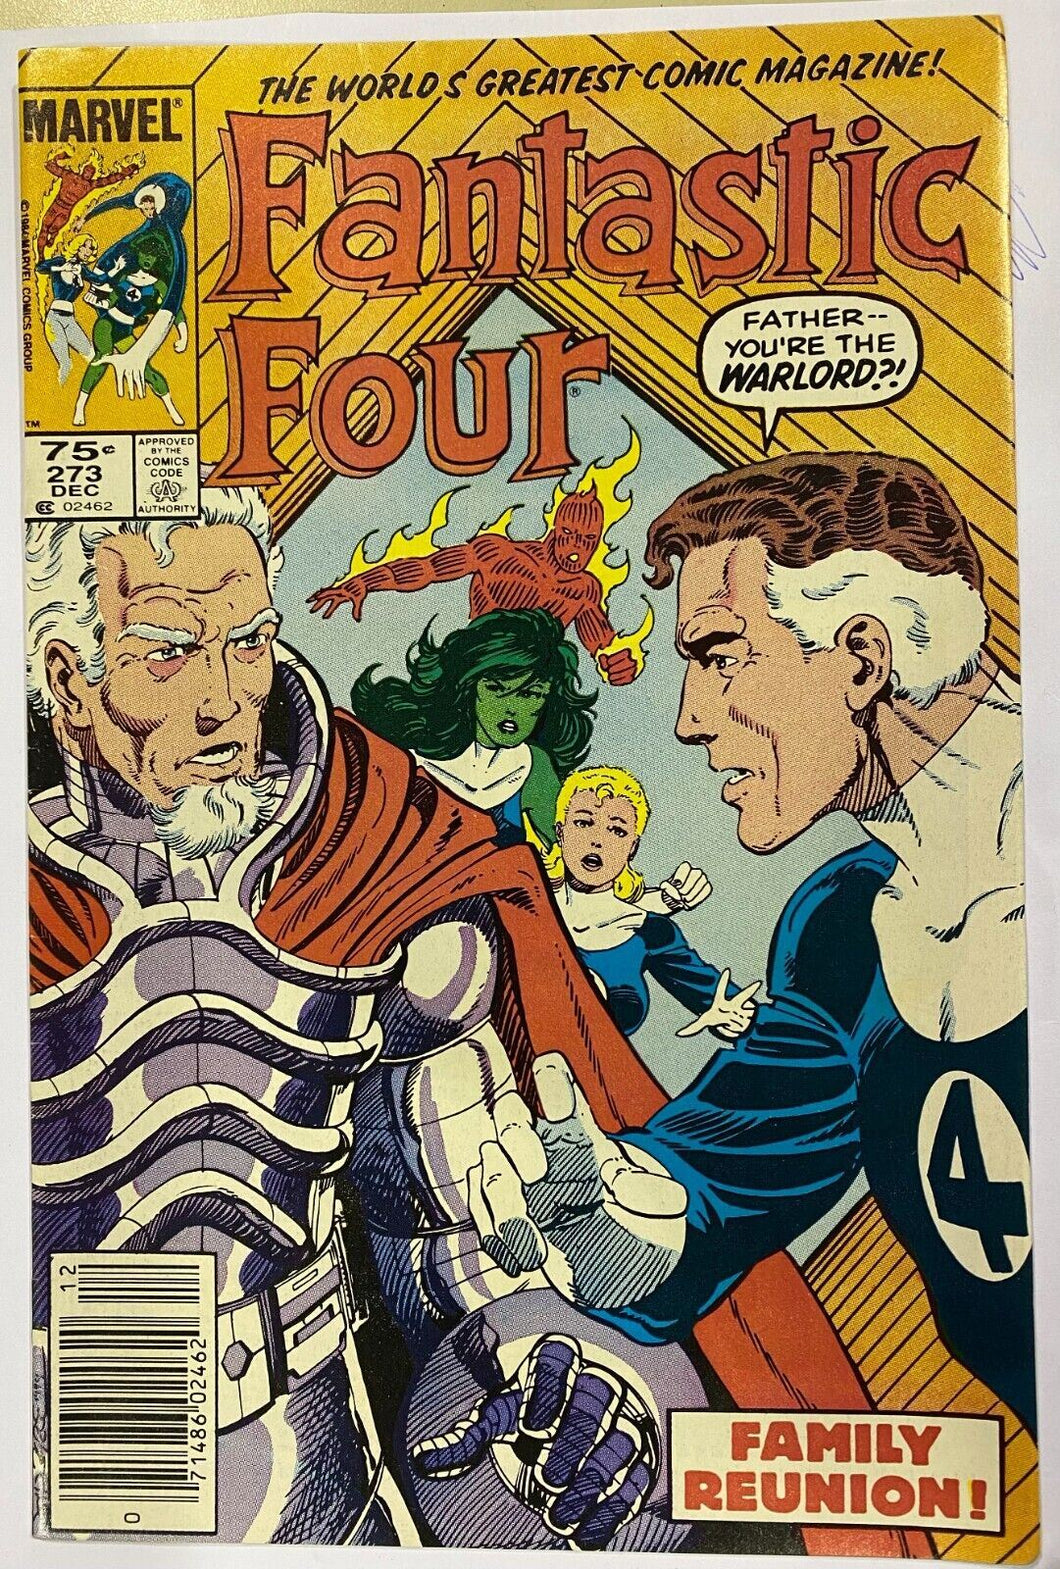 1984 Marvel Comics Fantastic Four Issue 273